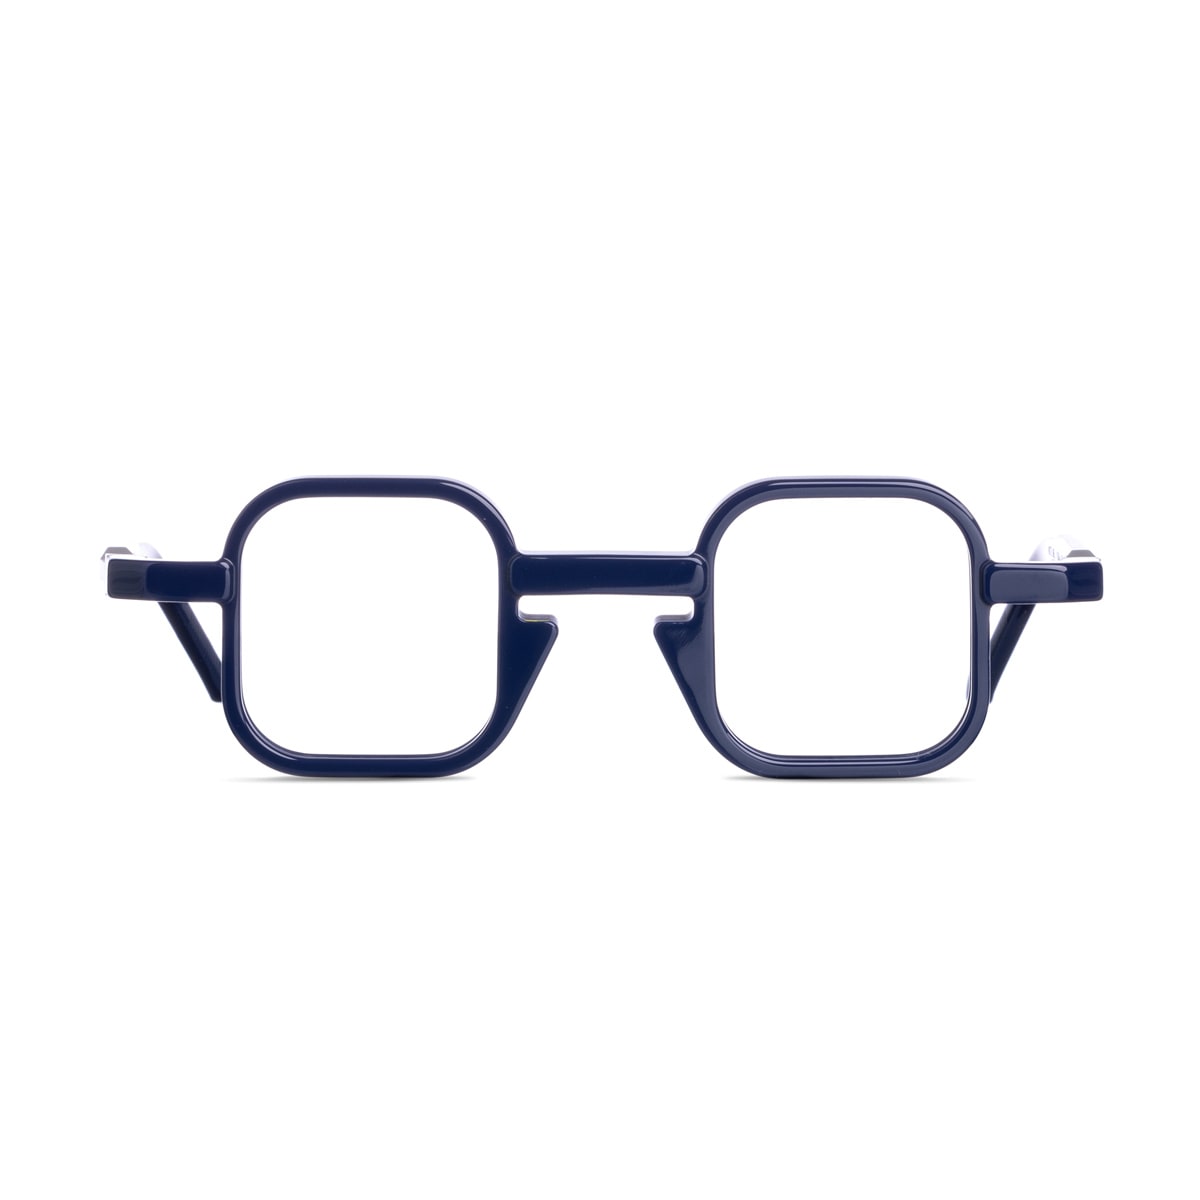 Wl0066 White Label Blue Navy Glasses